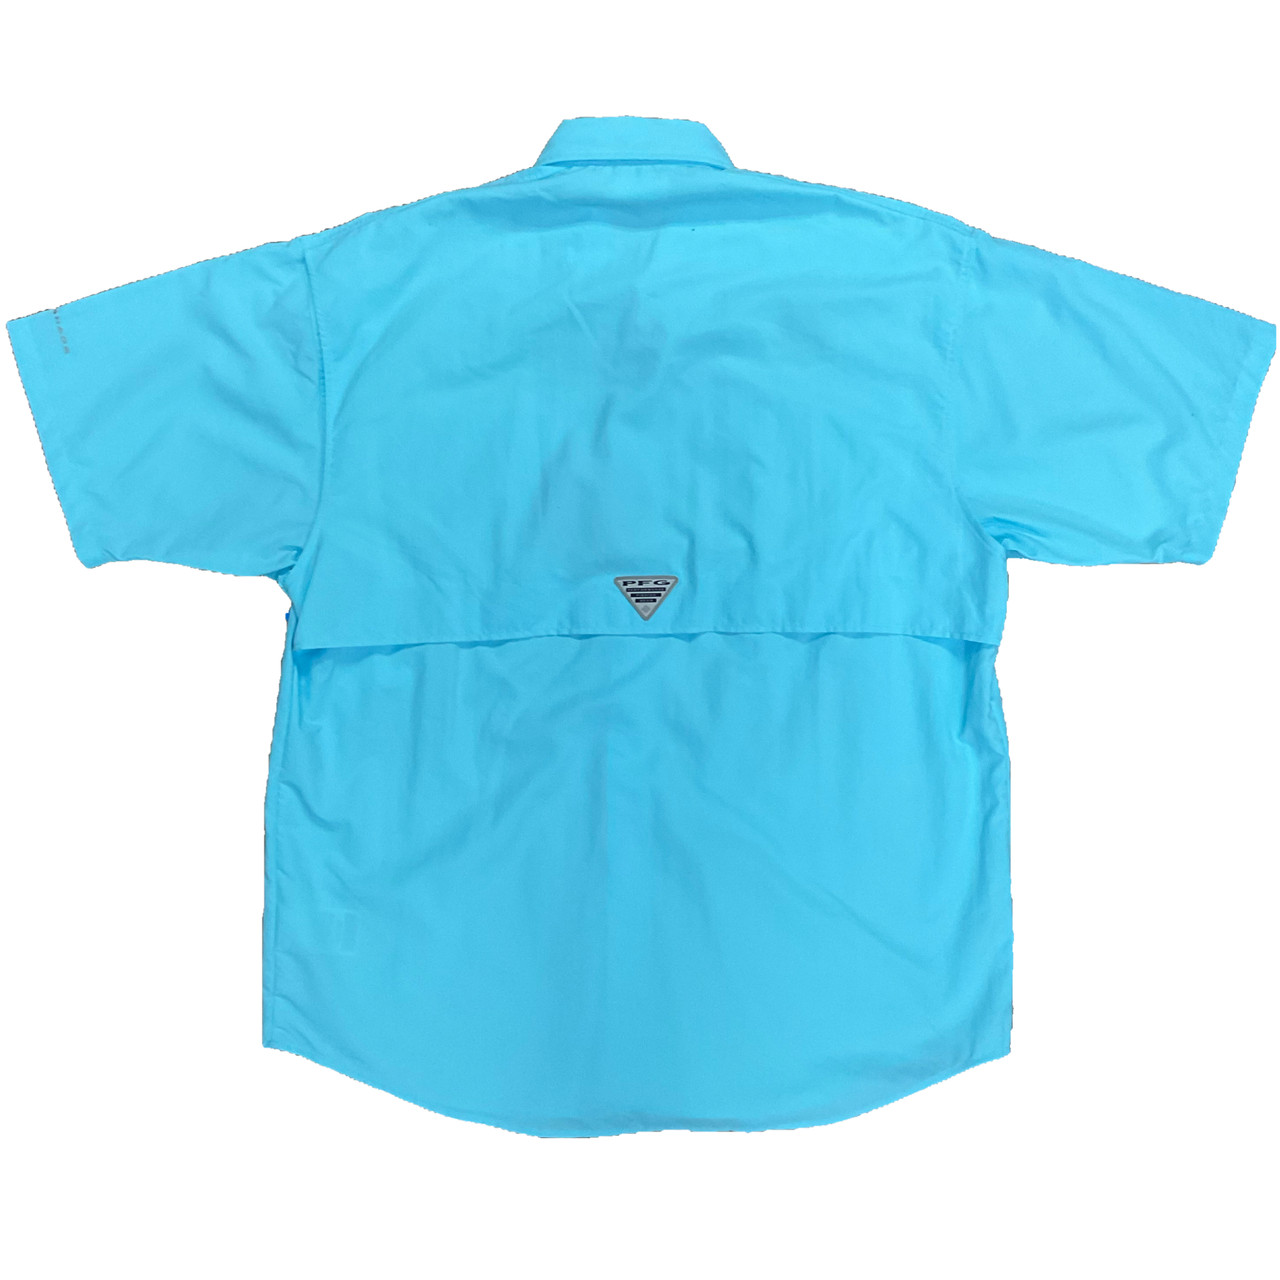 Fishing Shirt SS 454 Columbia Sports Wear Light Blue